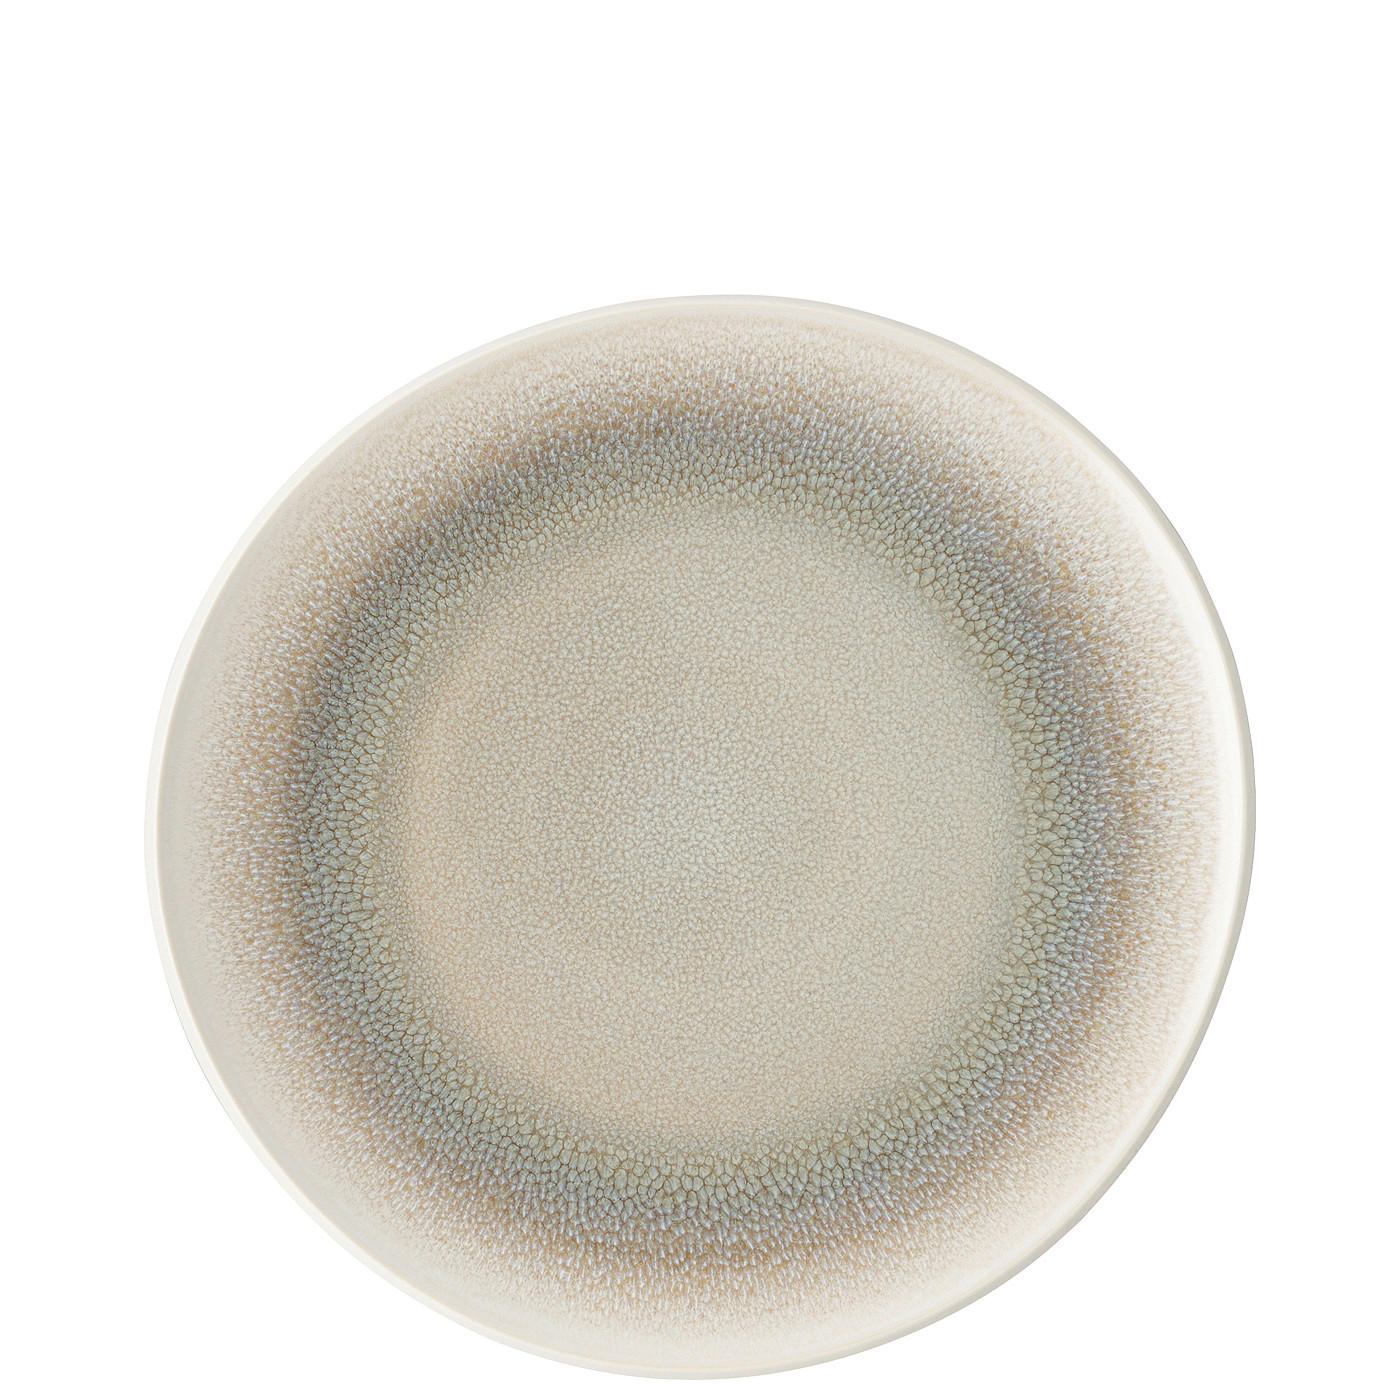 SPEISETELLER Junto Dune  - Beige, LIFESTYLE, Keramik (27/26/2,3cm) - Rosenthal